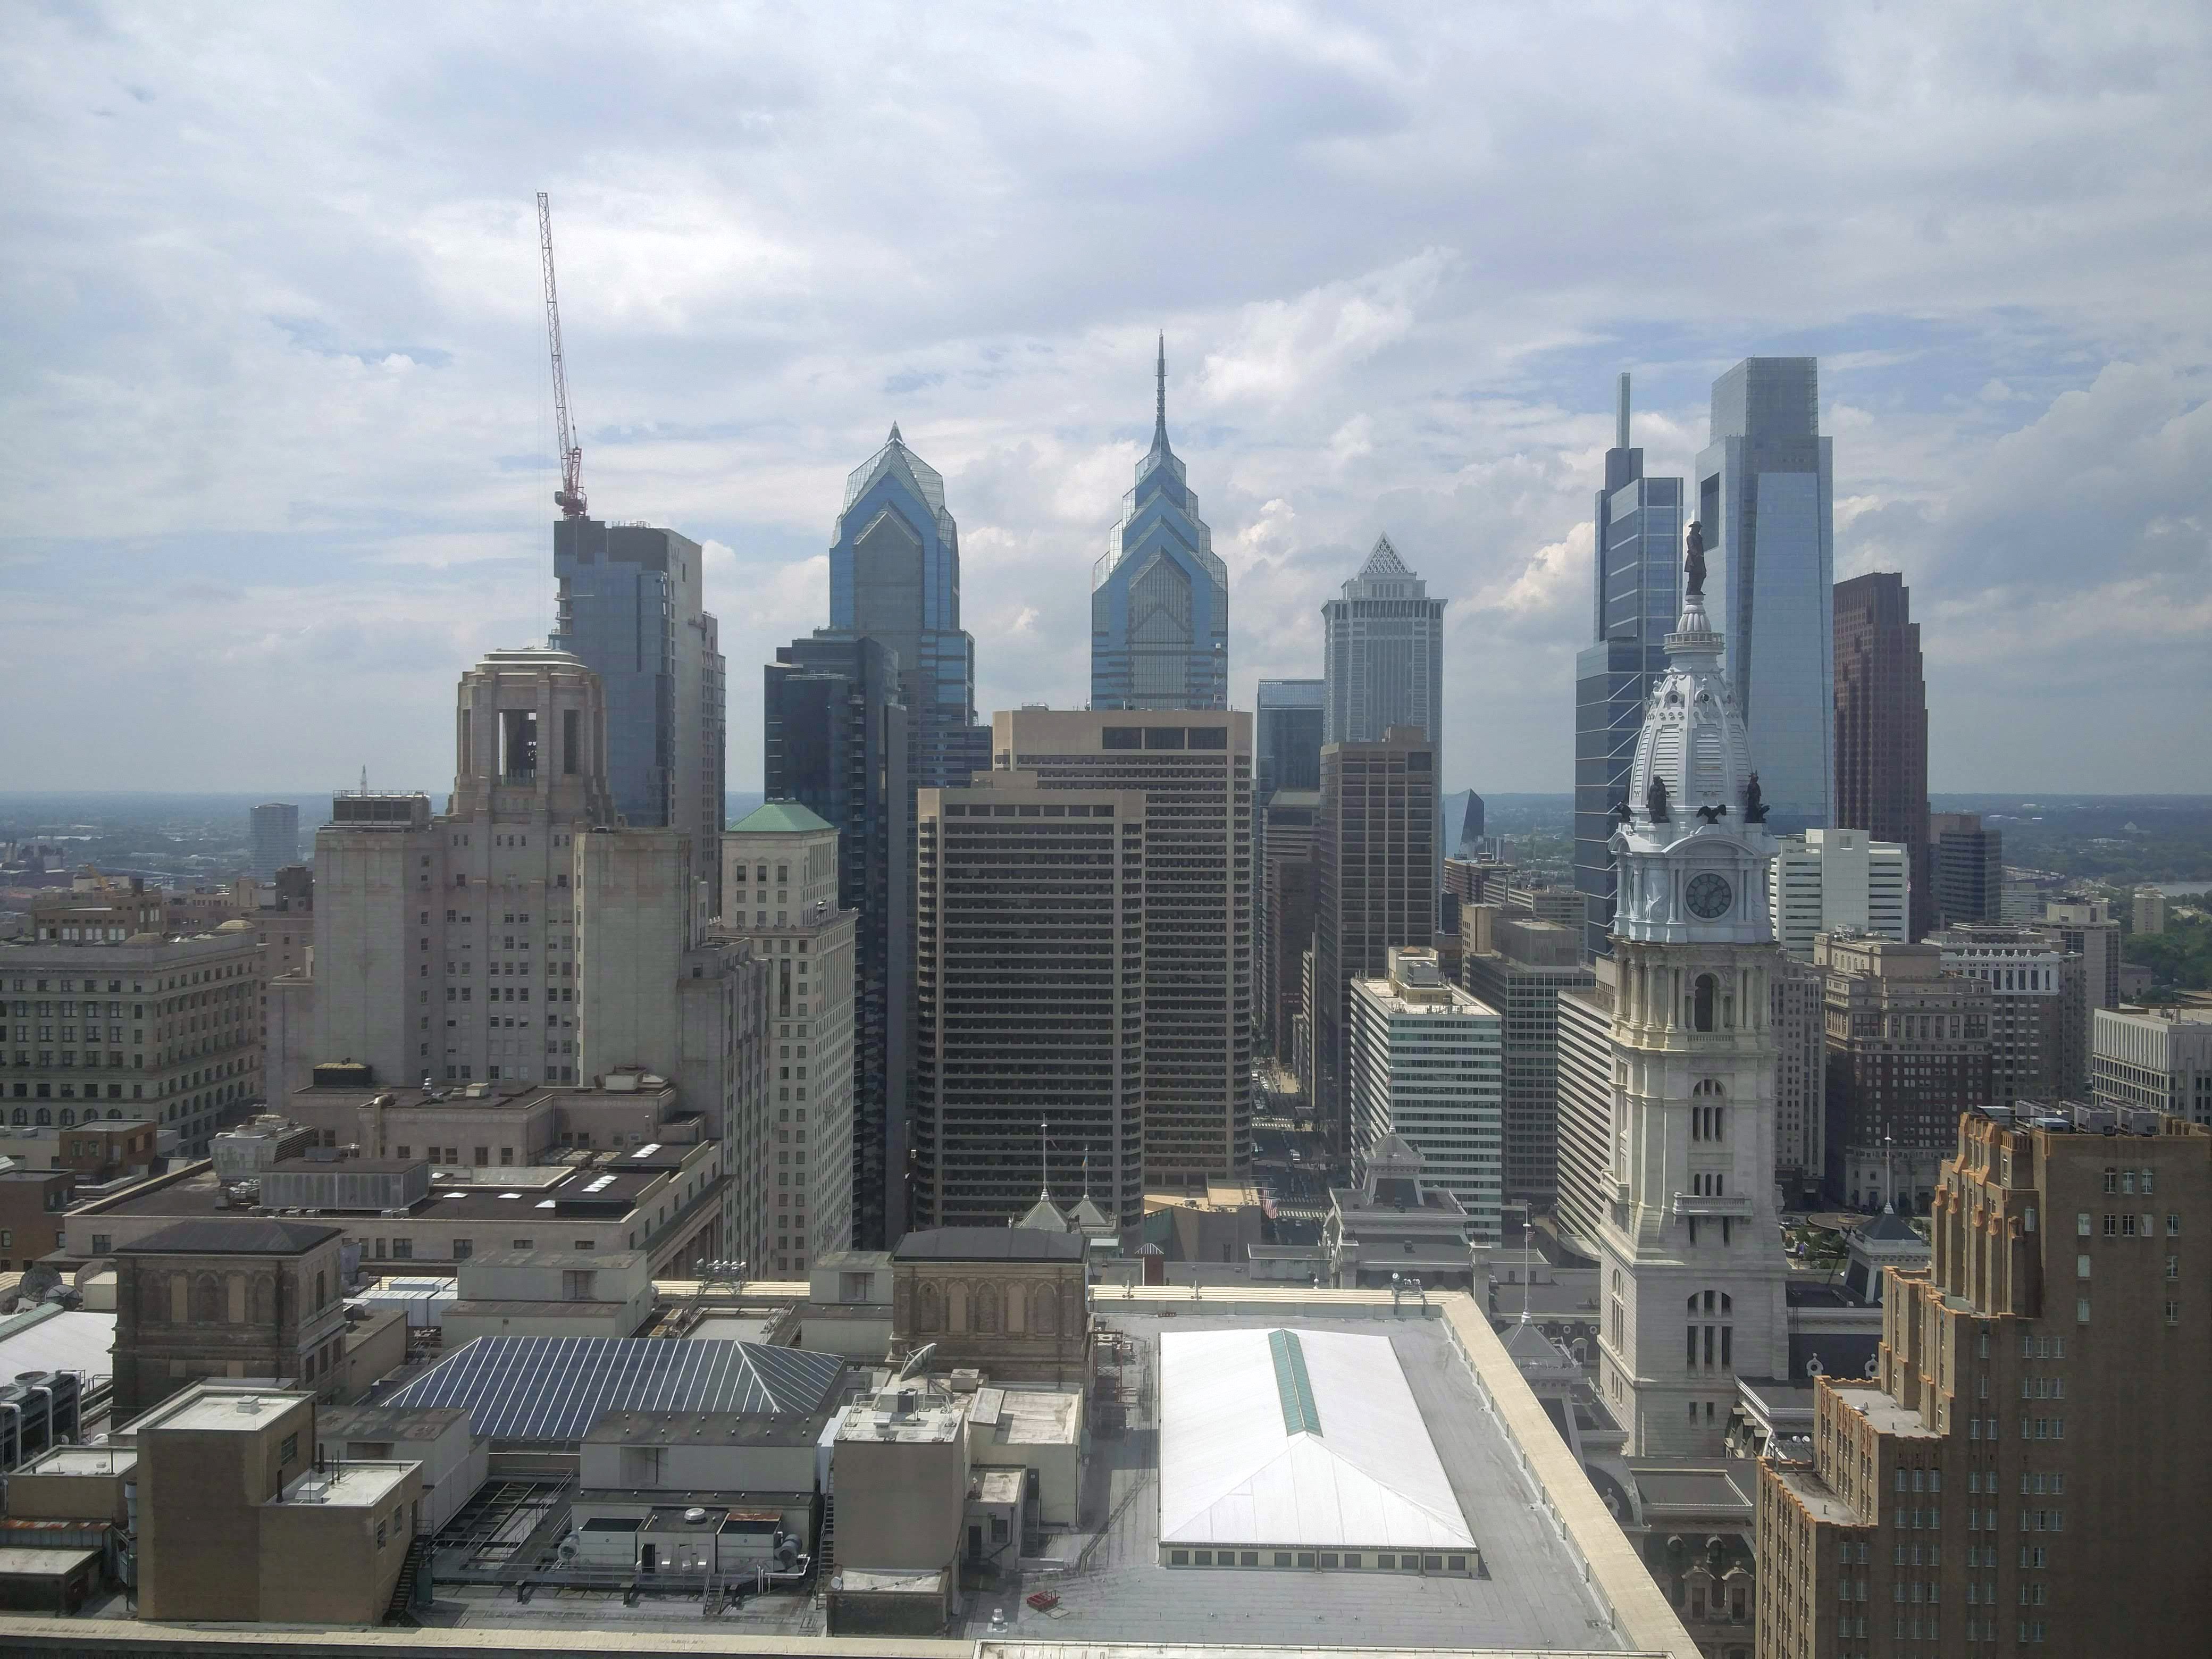 The Philadelphia skyline from the 31st floor of the Loews Hotel